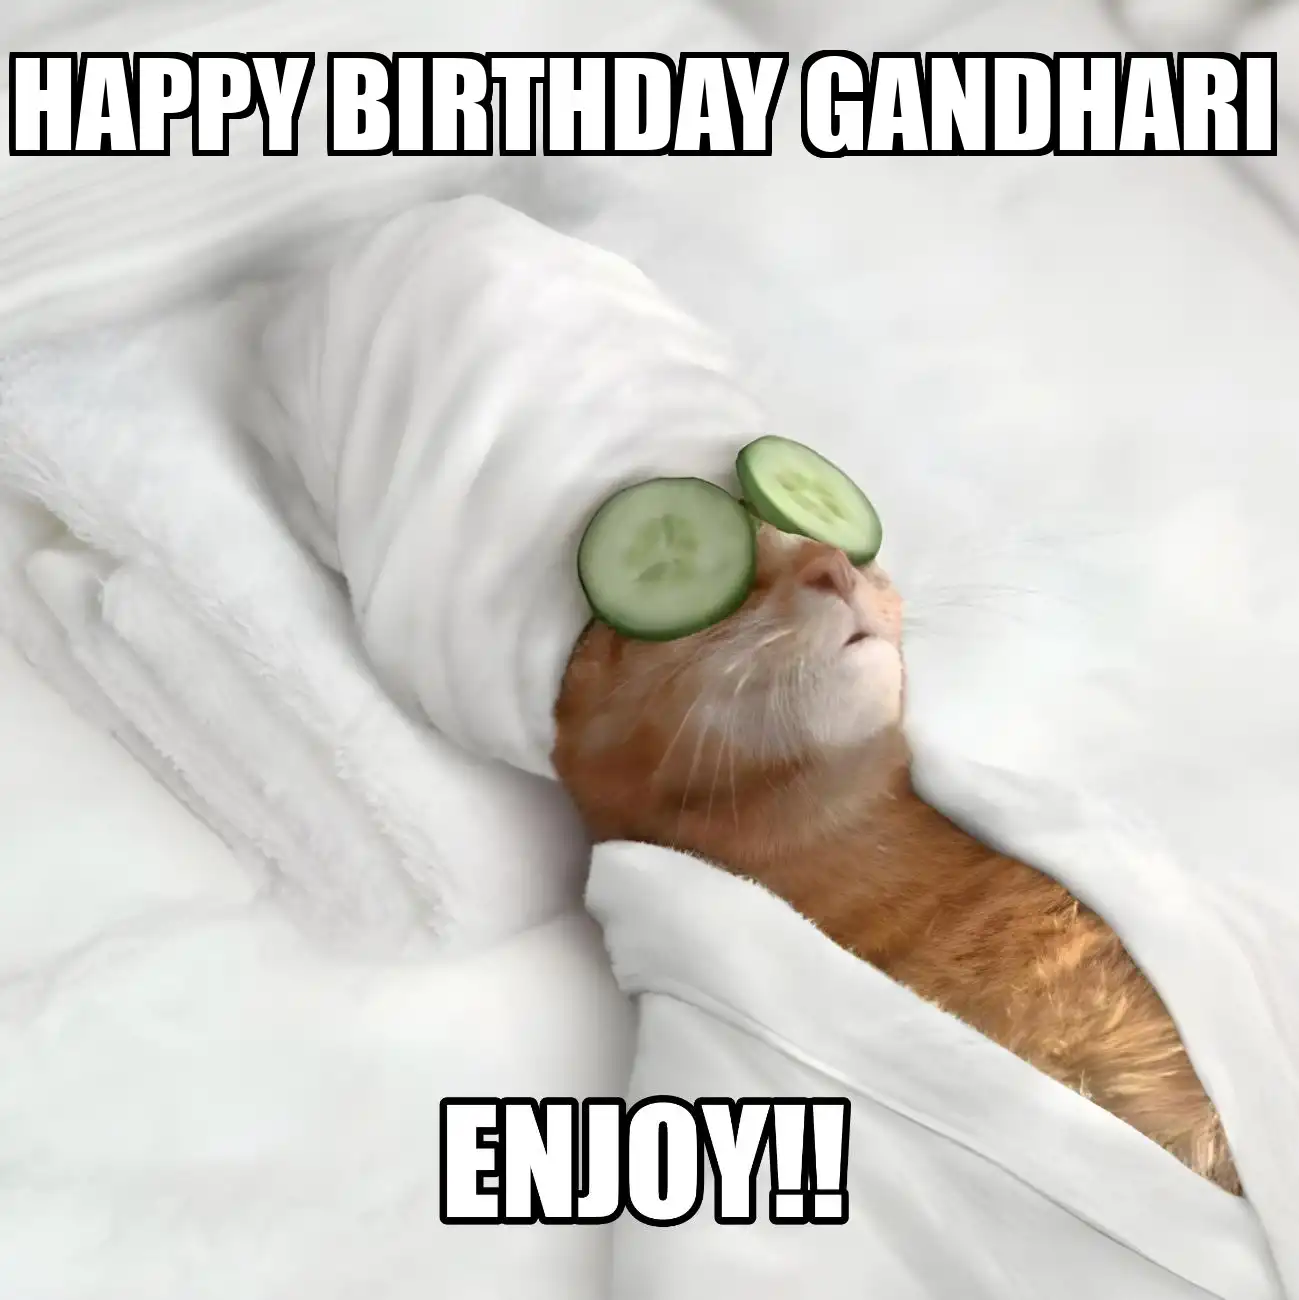 Happy Birthday Gandhari Enjoy Cat Meme